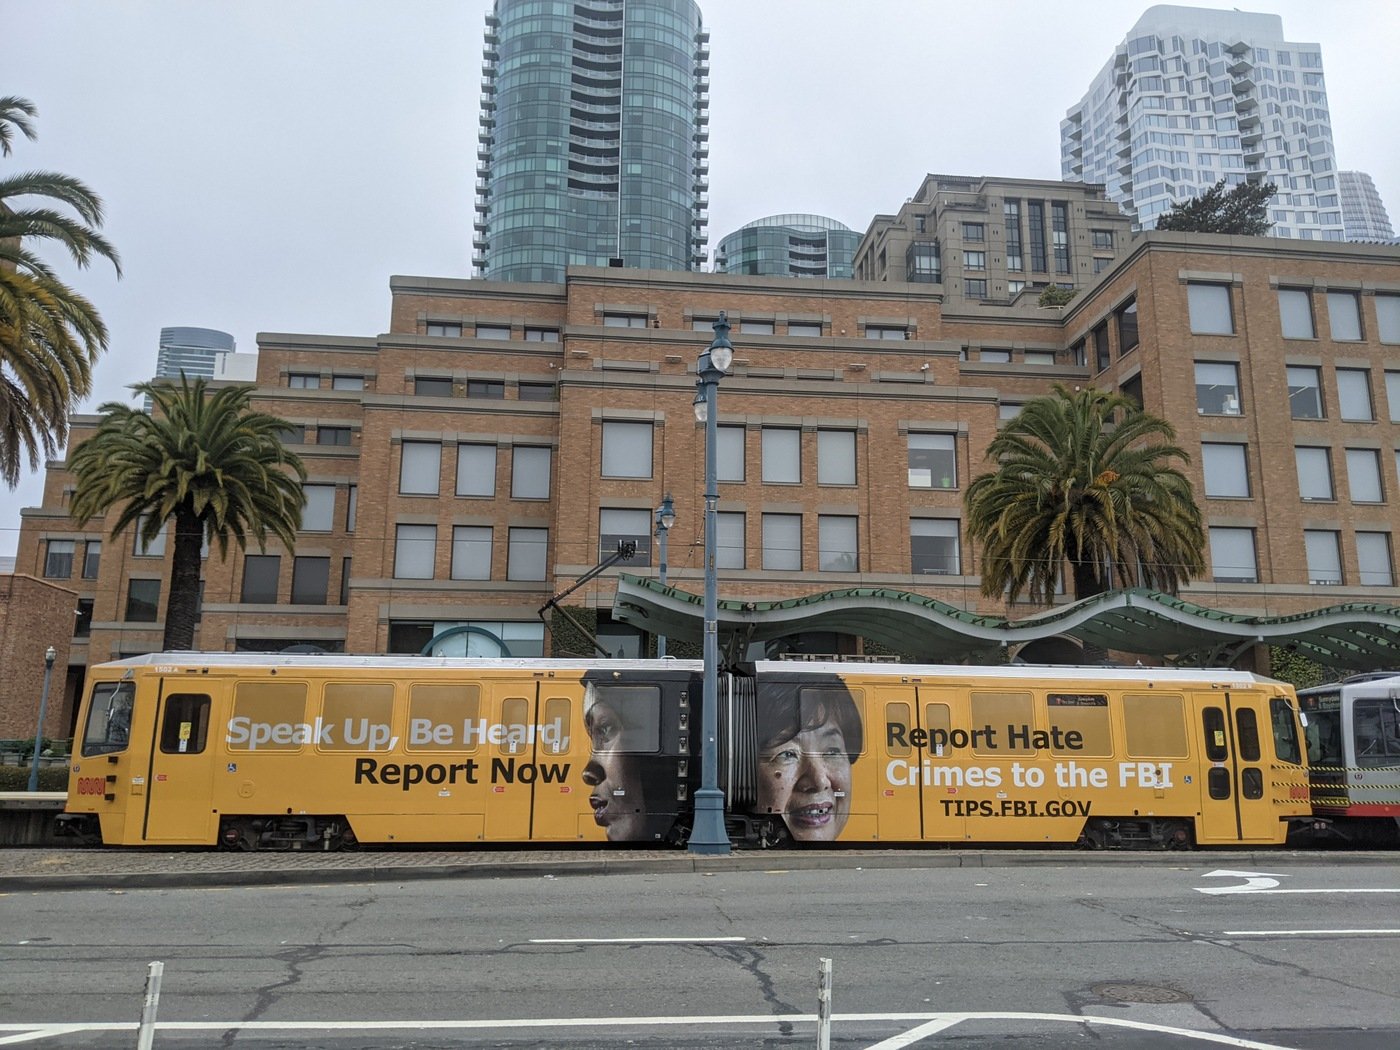 San Francisco Report Hate Crimes transportation ad